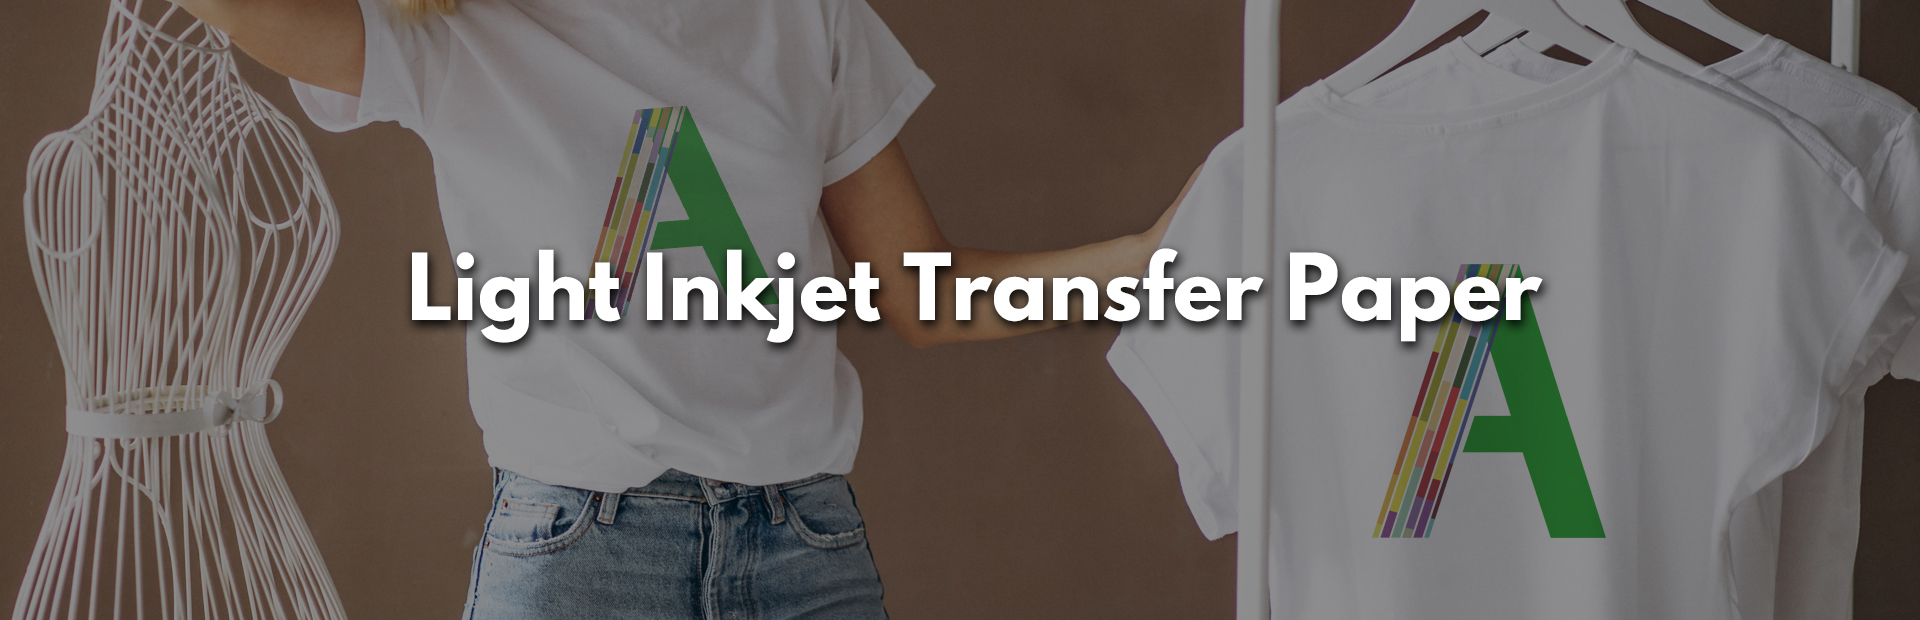 a sub dark t shirt transfer paper